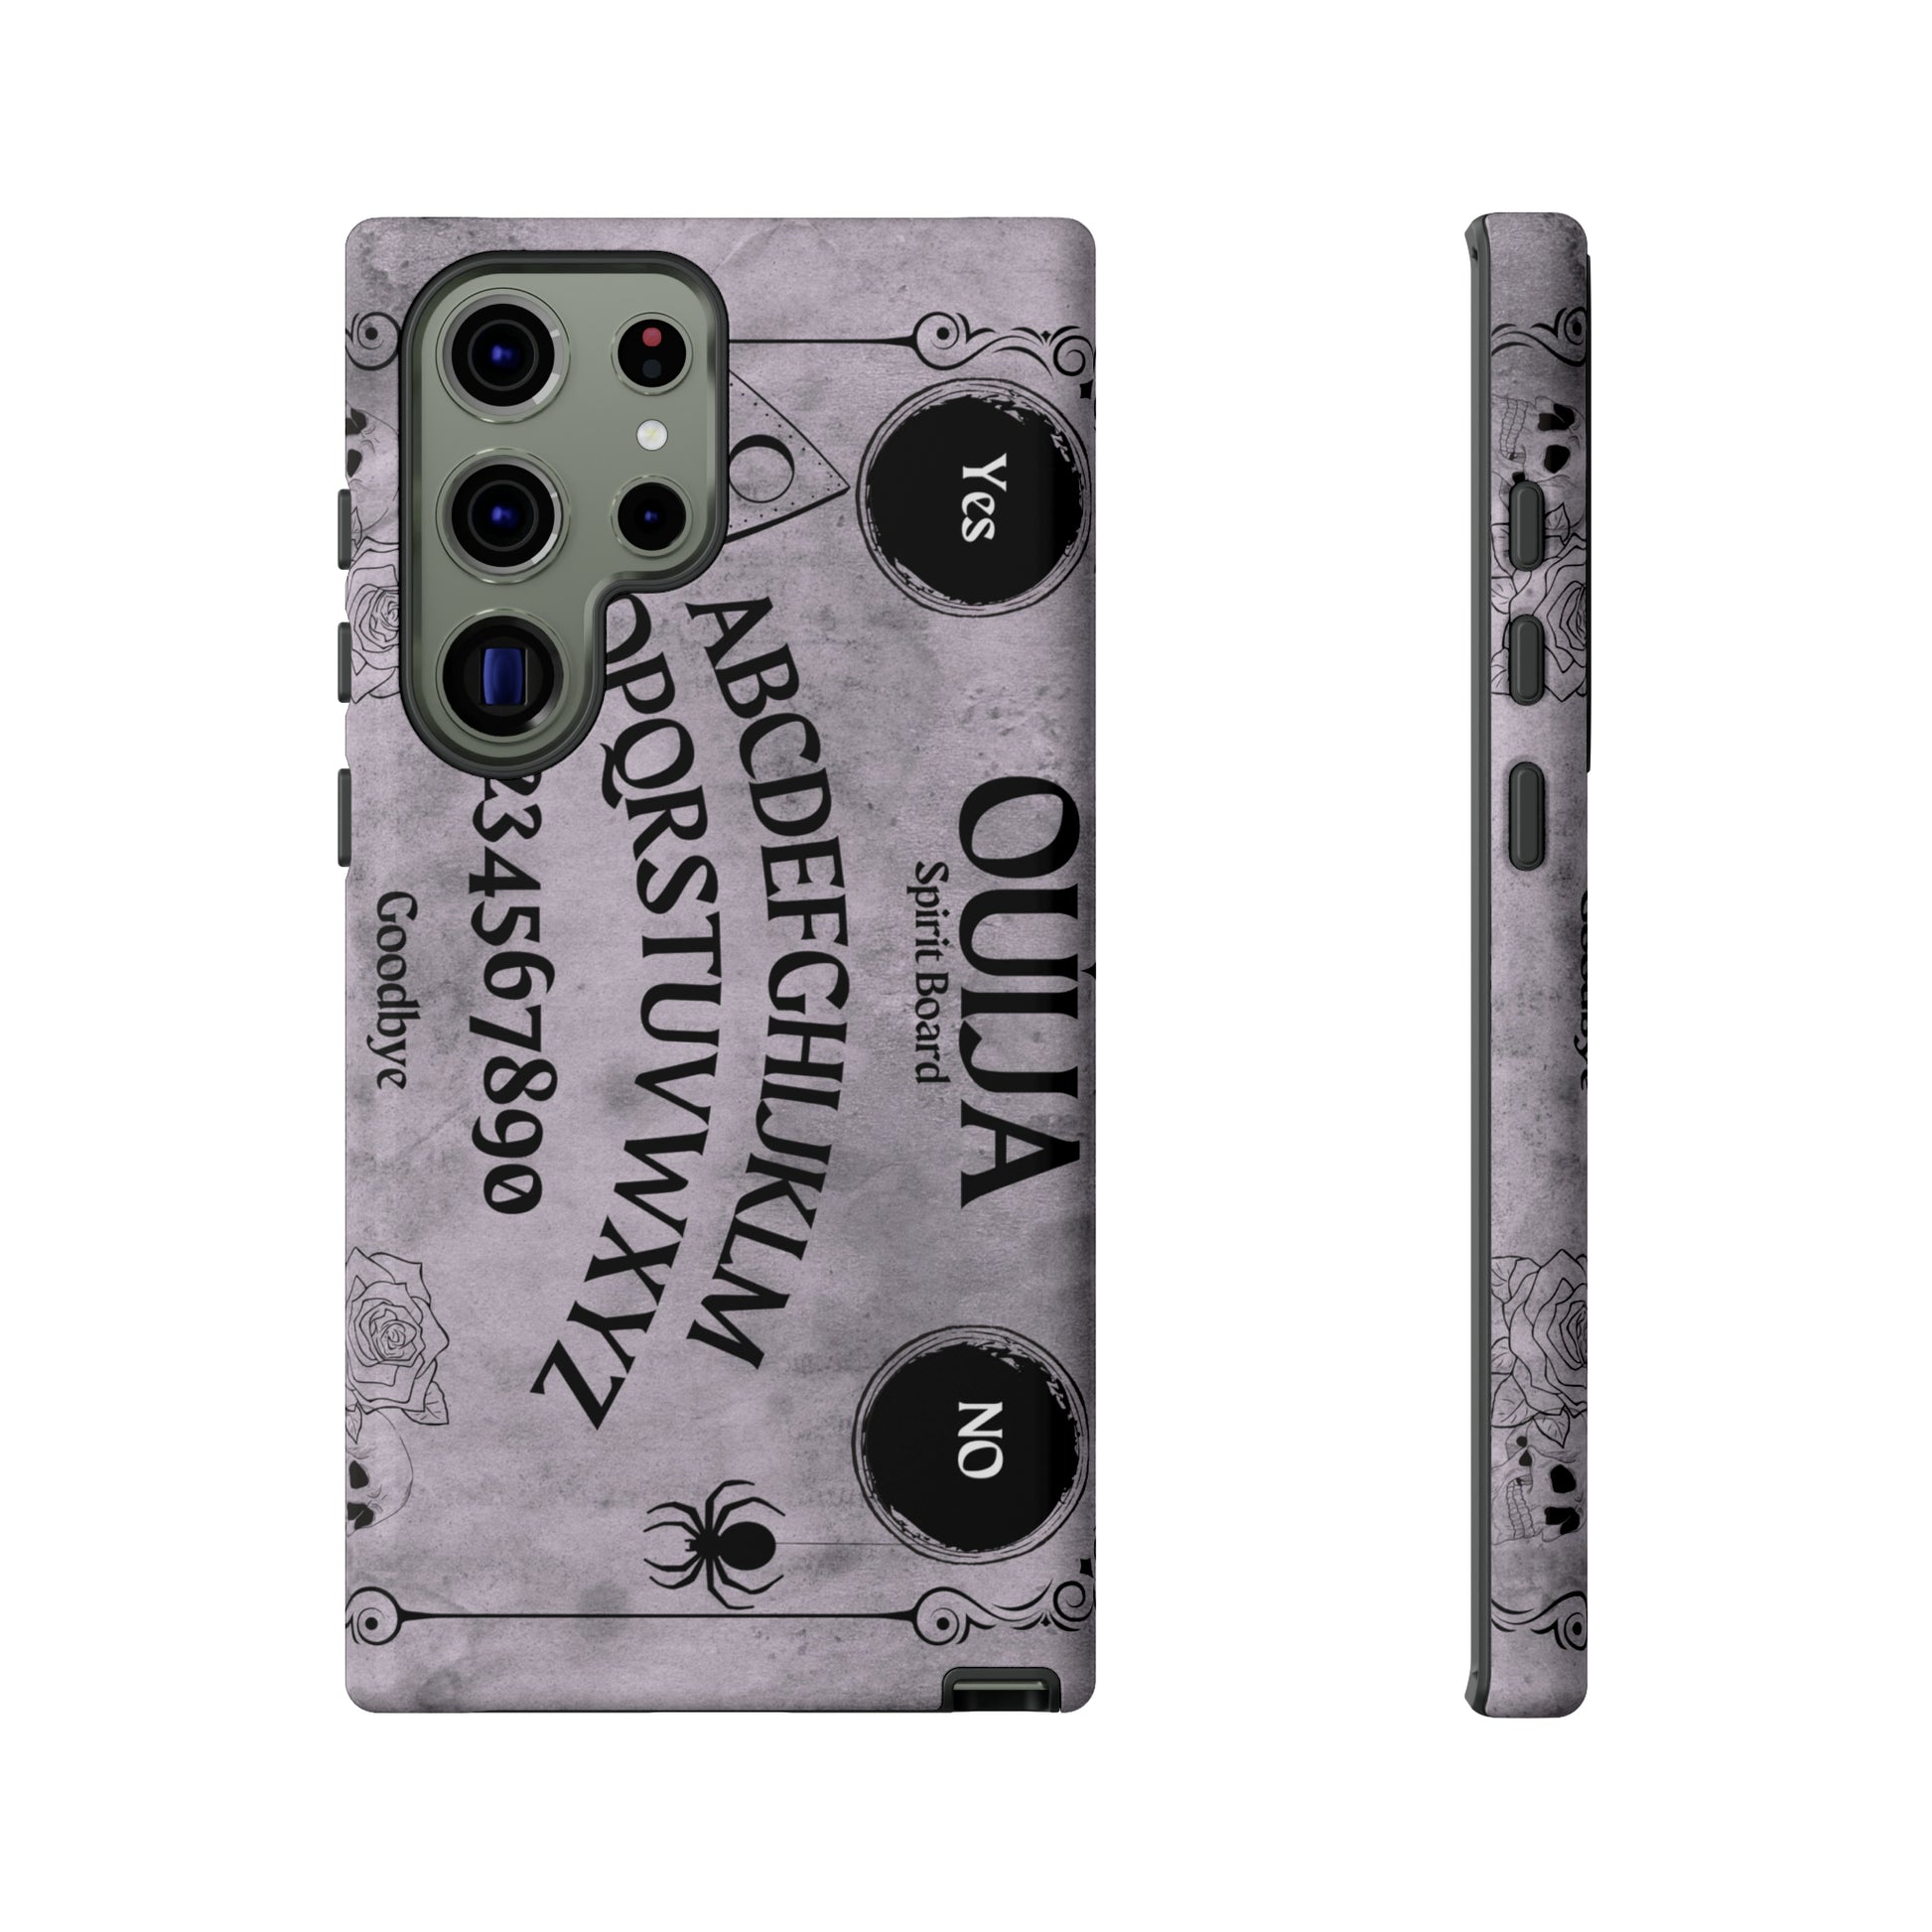 Ouija Board Tough Phone Cases For Samsung iPhone GooglePhone CaseVTZdesignsSamsung Galaxy S23 UltraGlossyAccessoriesGlossyhalloween